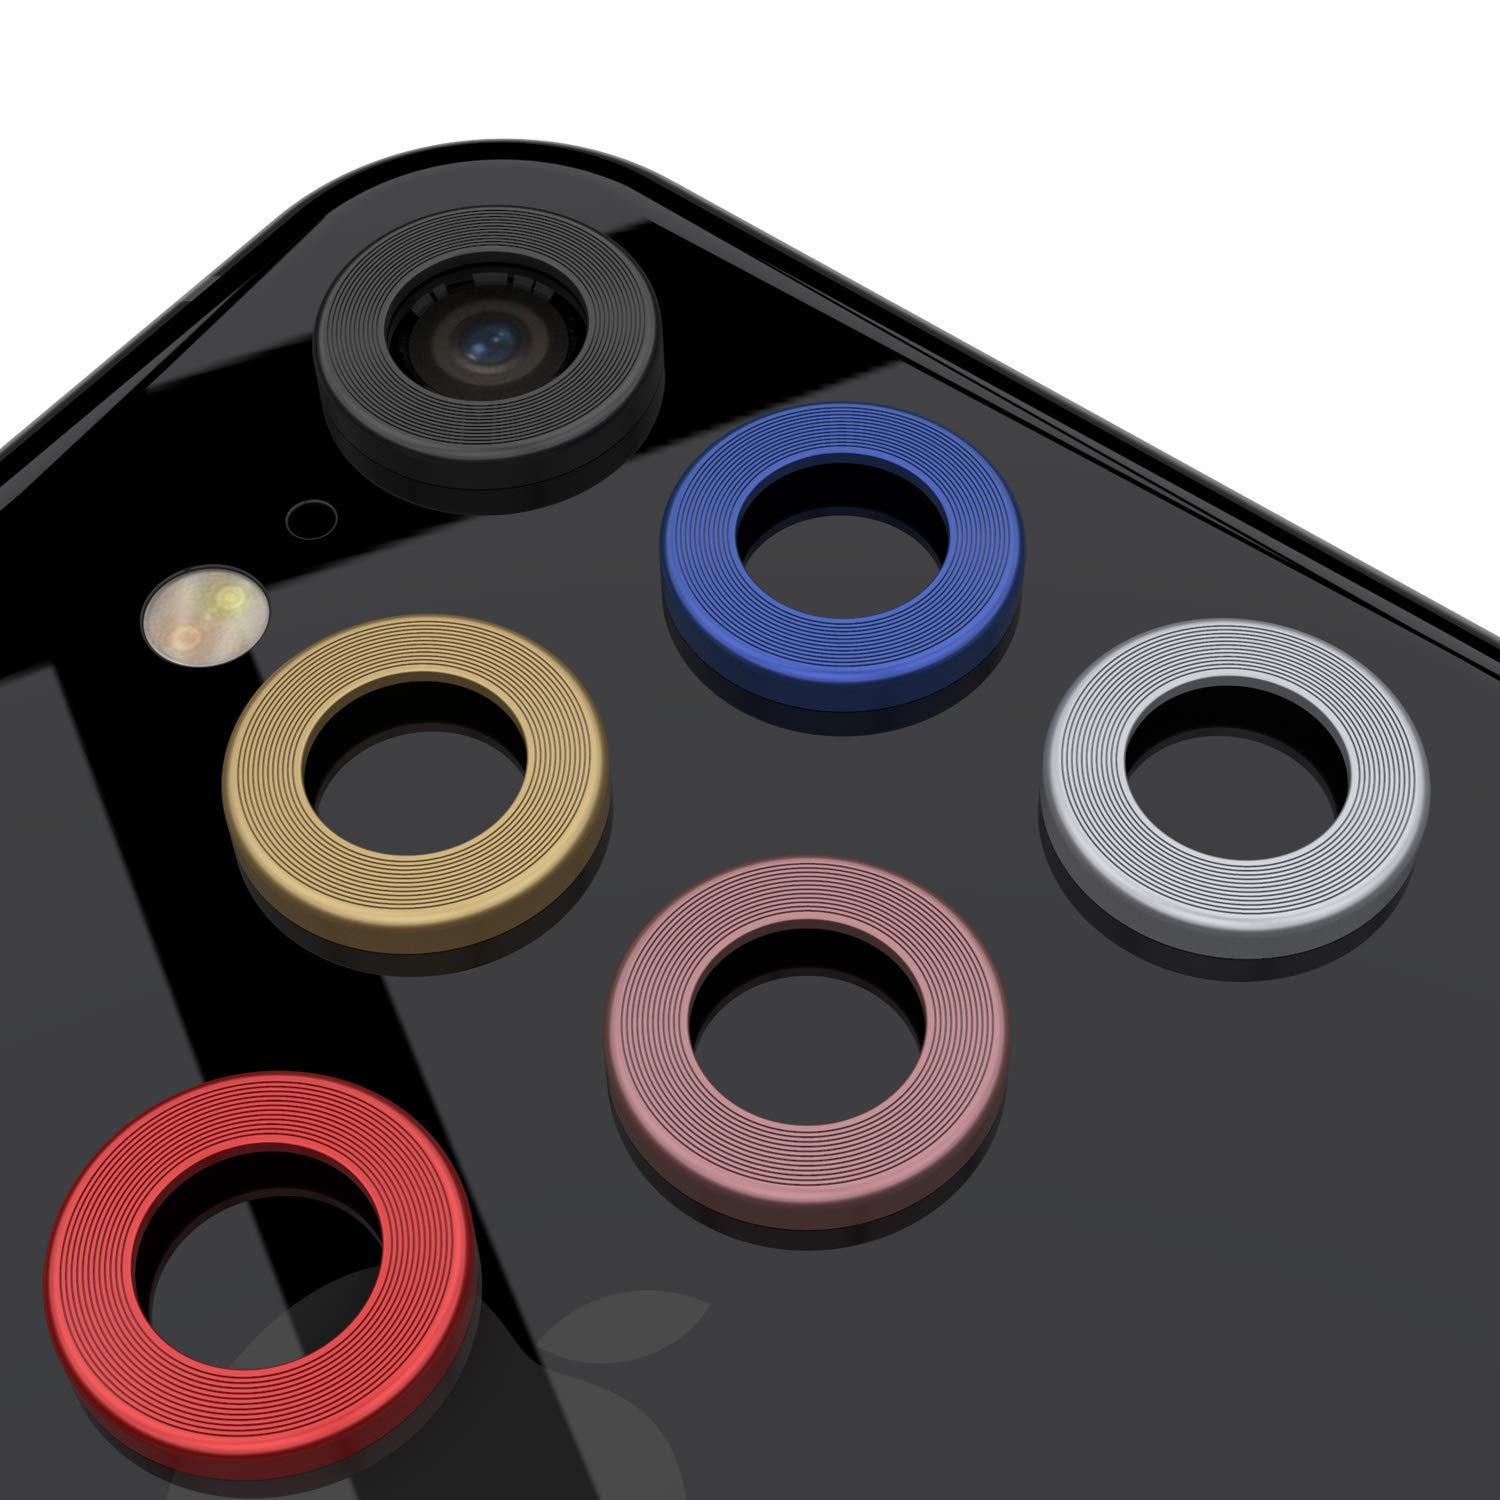 Punkcase iPhone 11 Camera Protector Ring [Black]